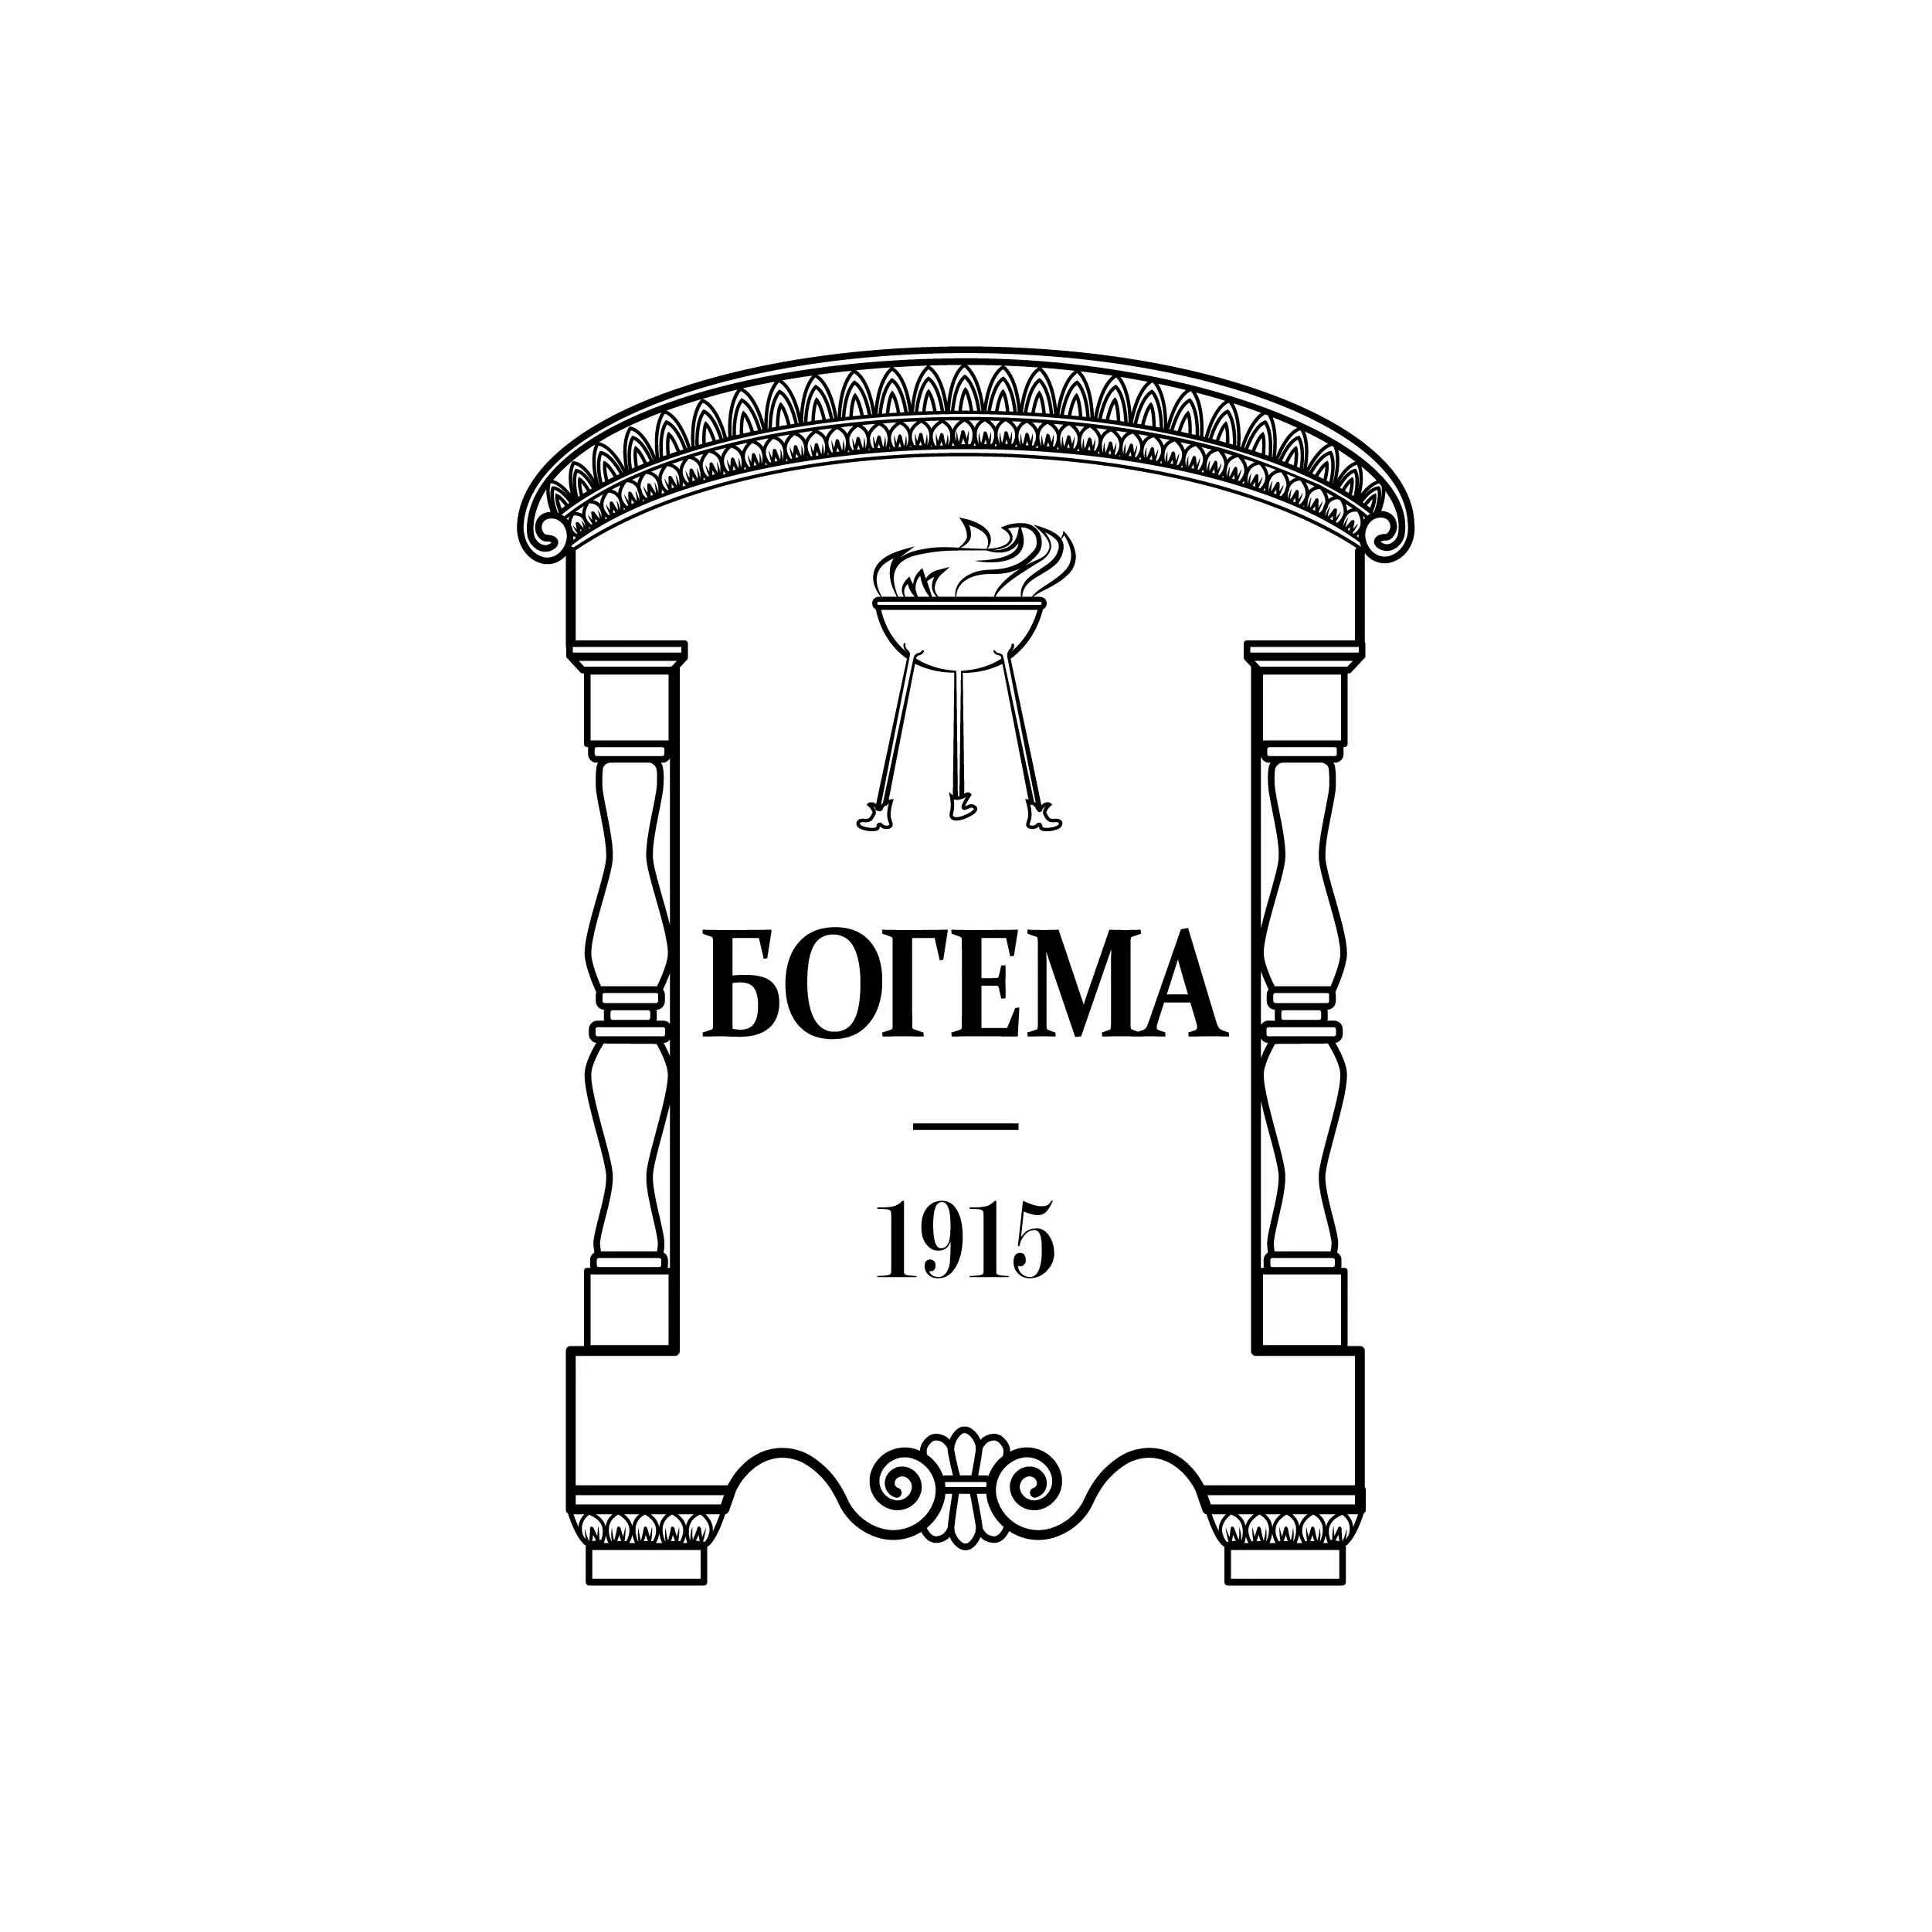 Журнал Богема. Логотип журнала Богема. Богема рисунок. Богема шутки.